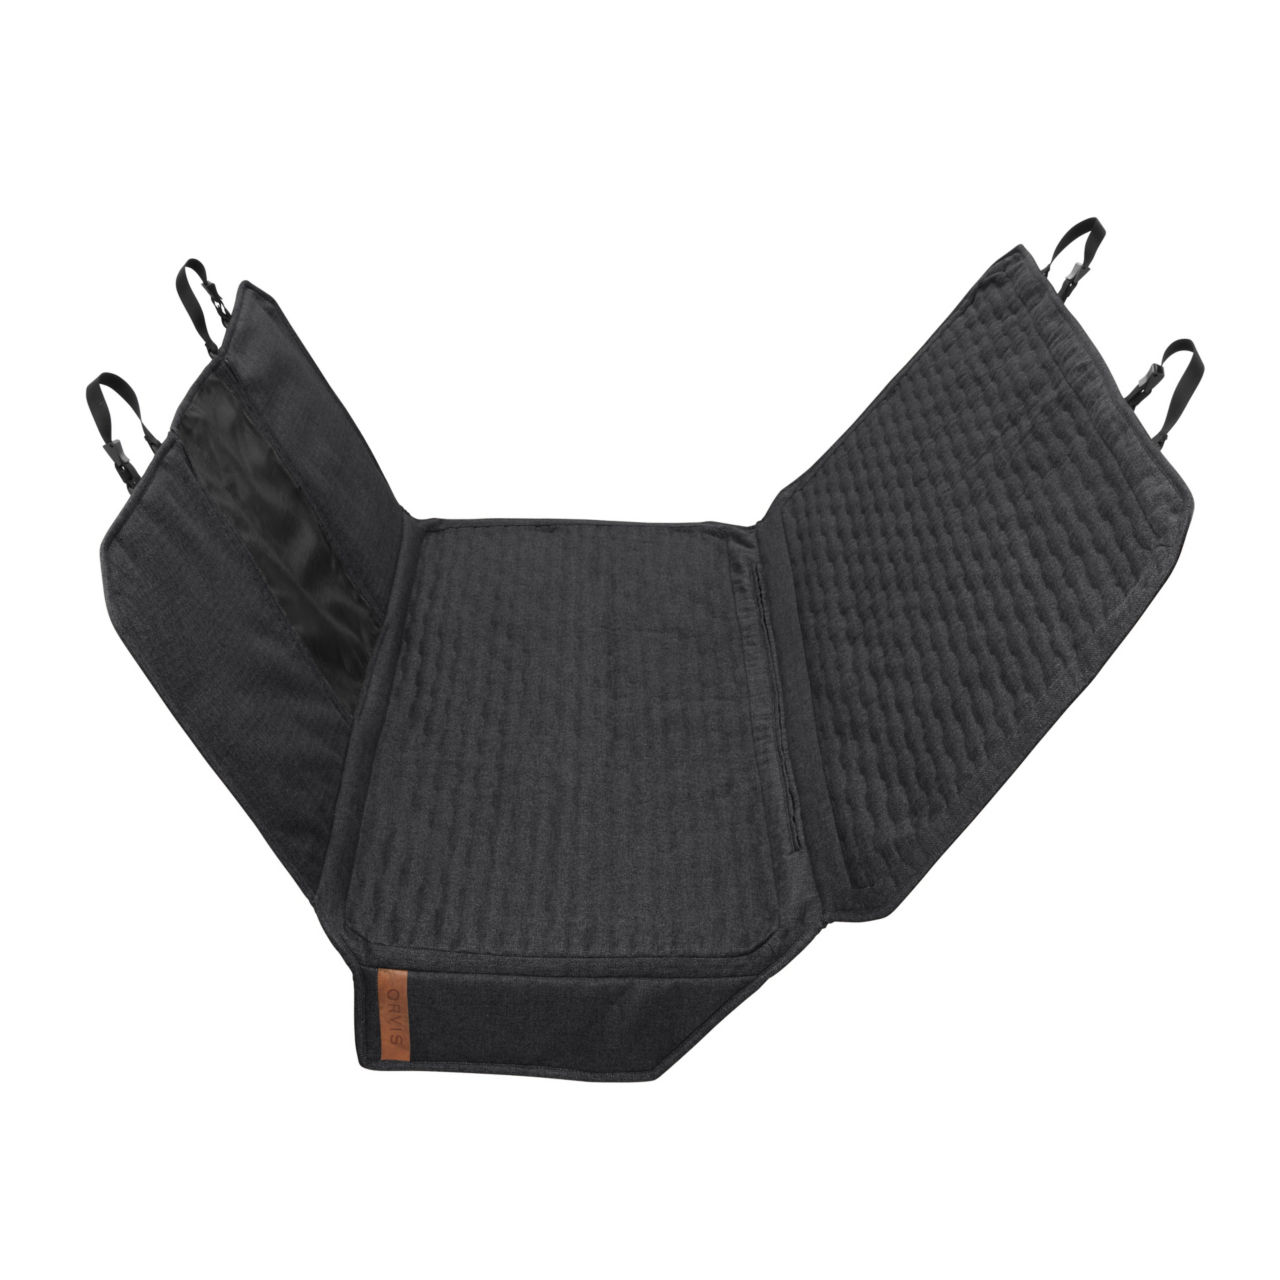 Orvis Grip-Tight® Windowed Hammock Seat Protector - BLACK image number 1